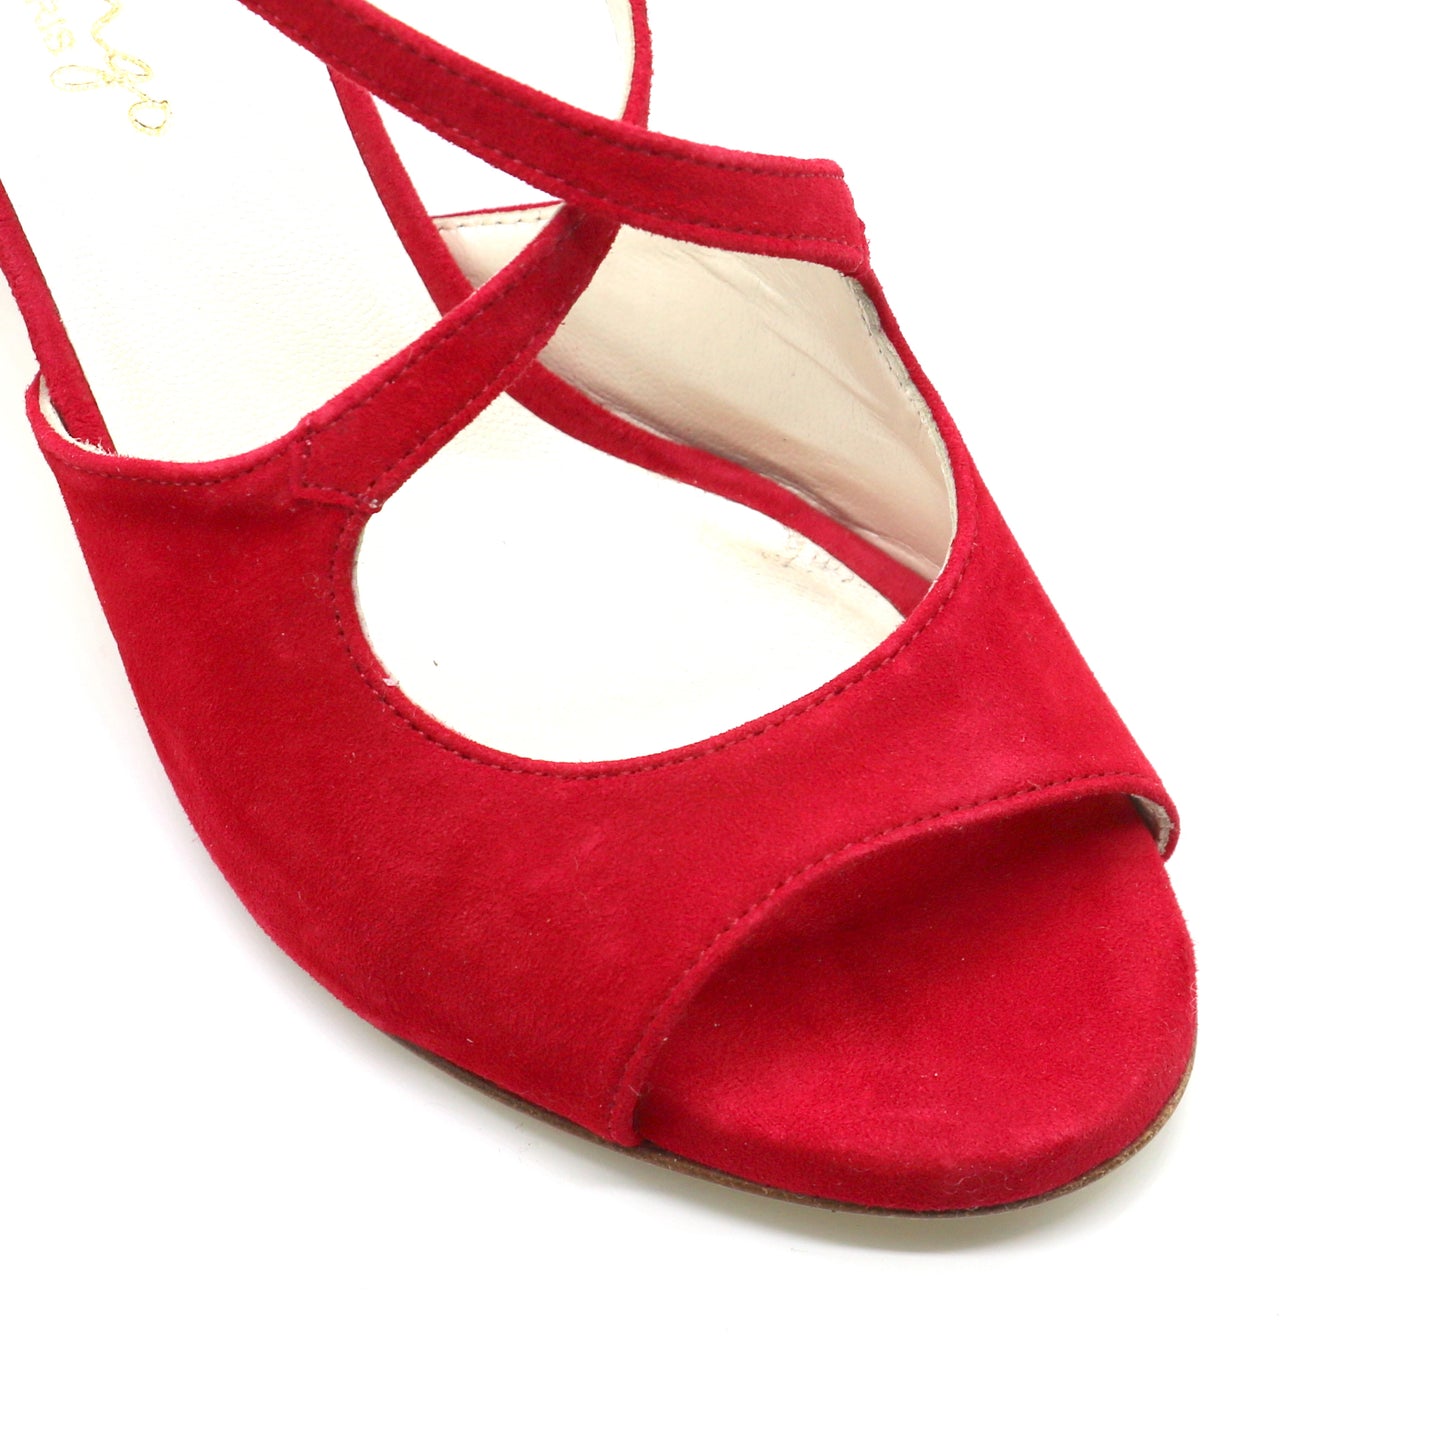 Double Breasted Velvet Deep Red heels 6cm